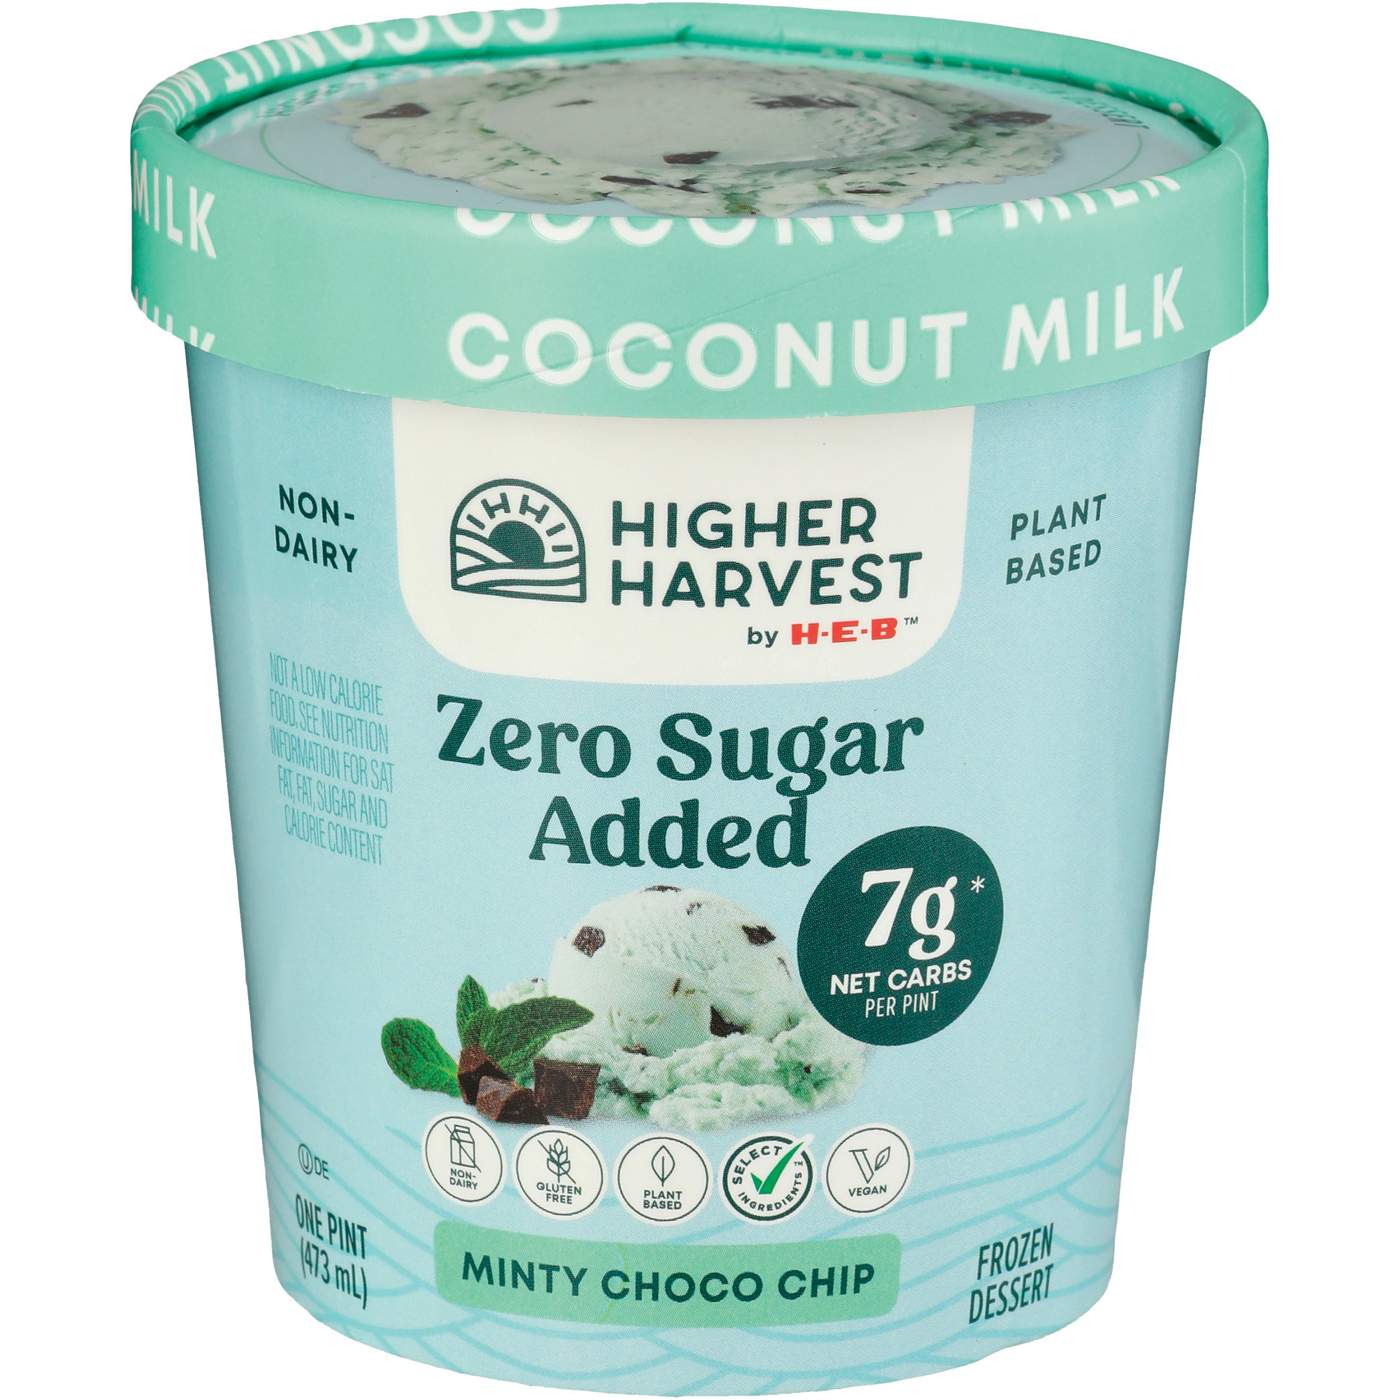 Higher Harvest by H-E-B Zero Sugar Added Non-Dairy Frozen Dessert - Minty Choco Chip; image 1 of 2